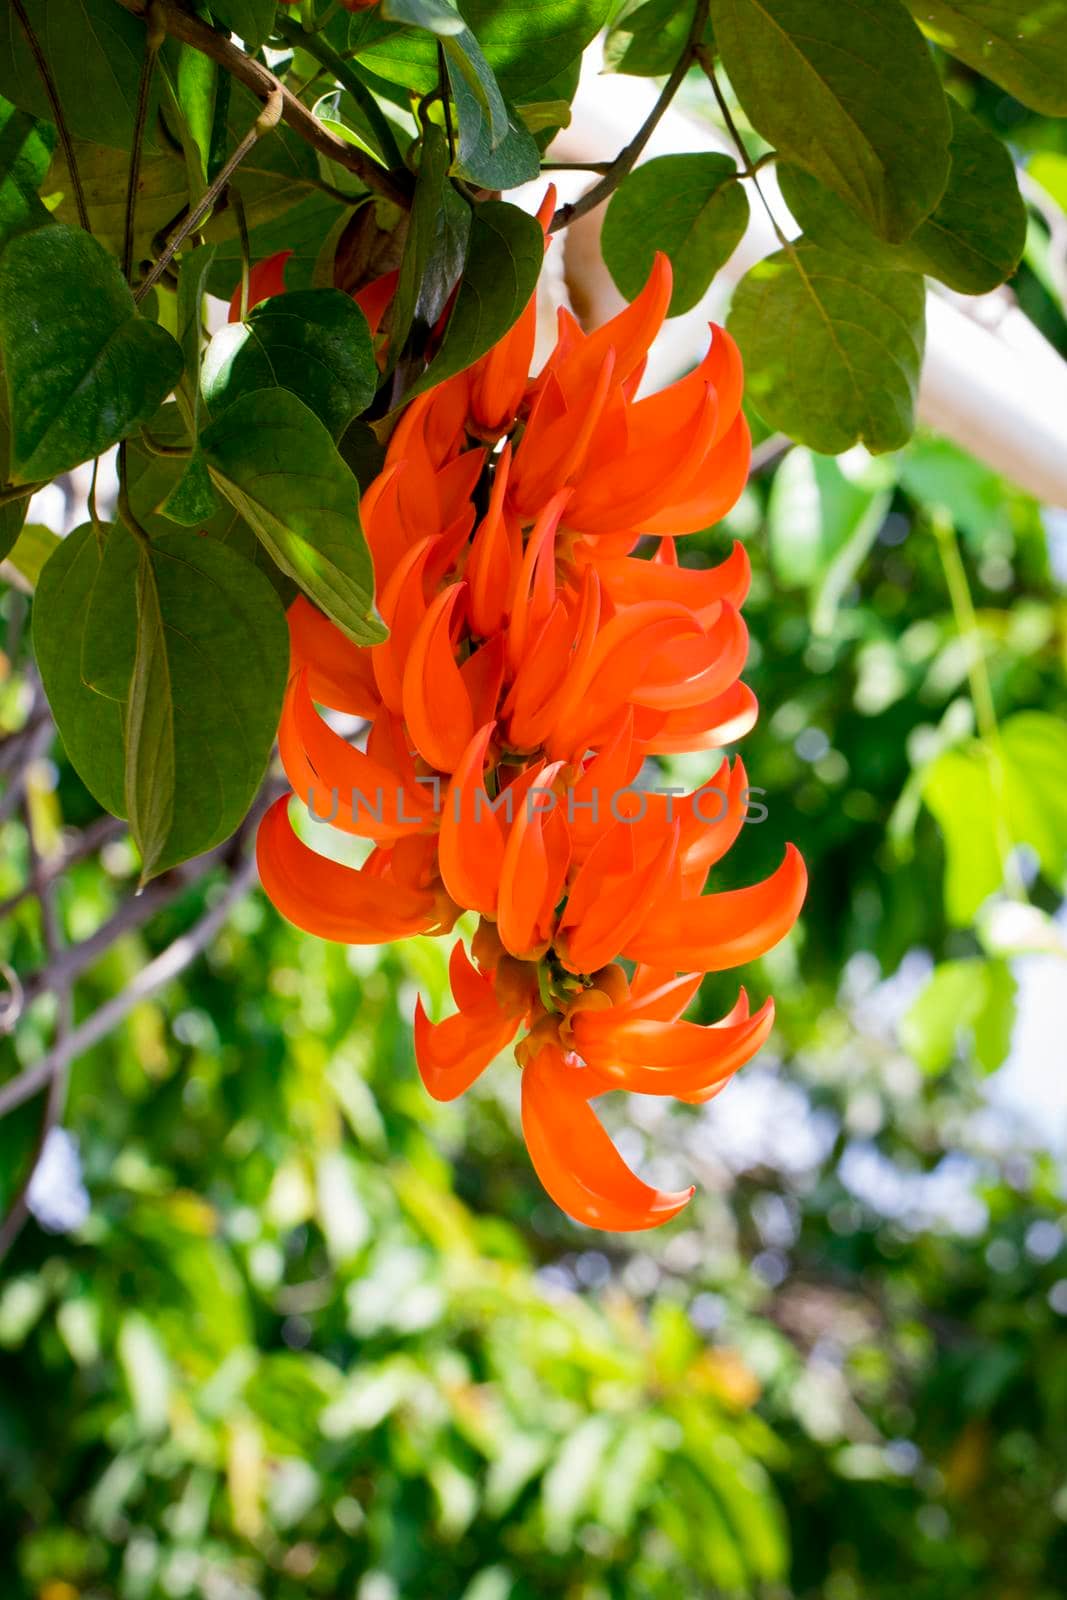 Flower of New Guinea creeper, Red Lade Vine in the garden